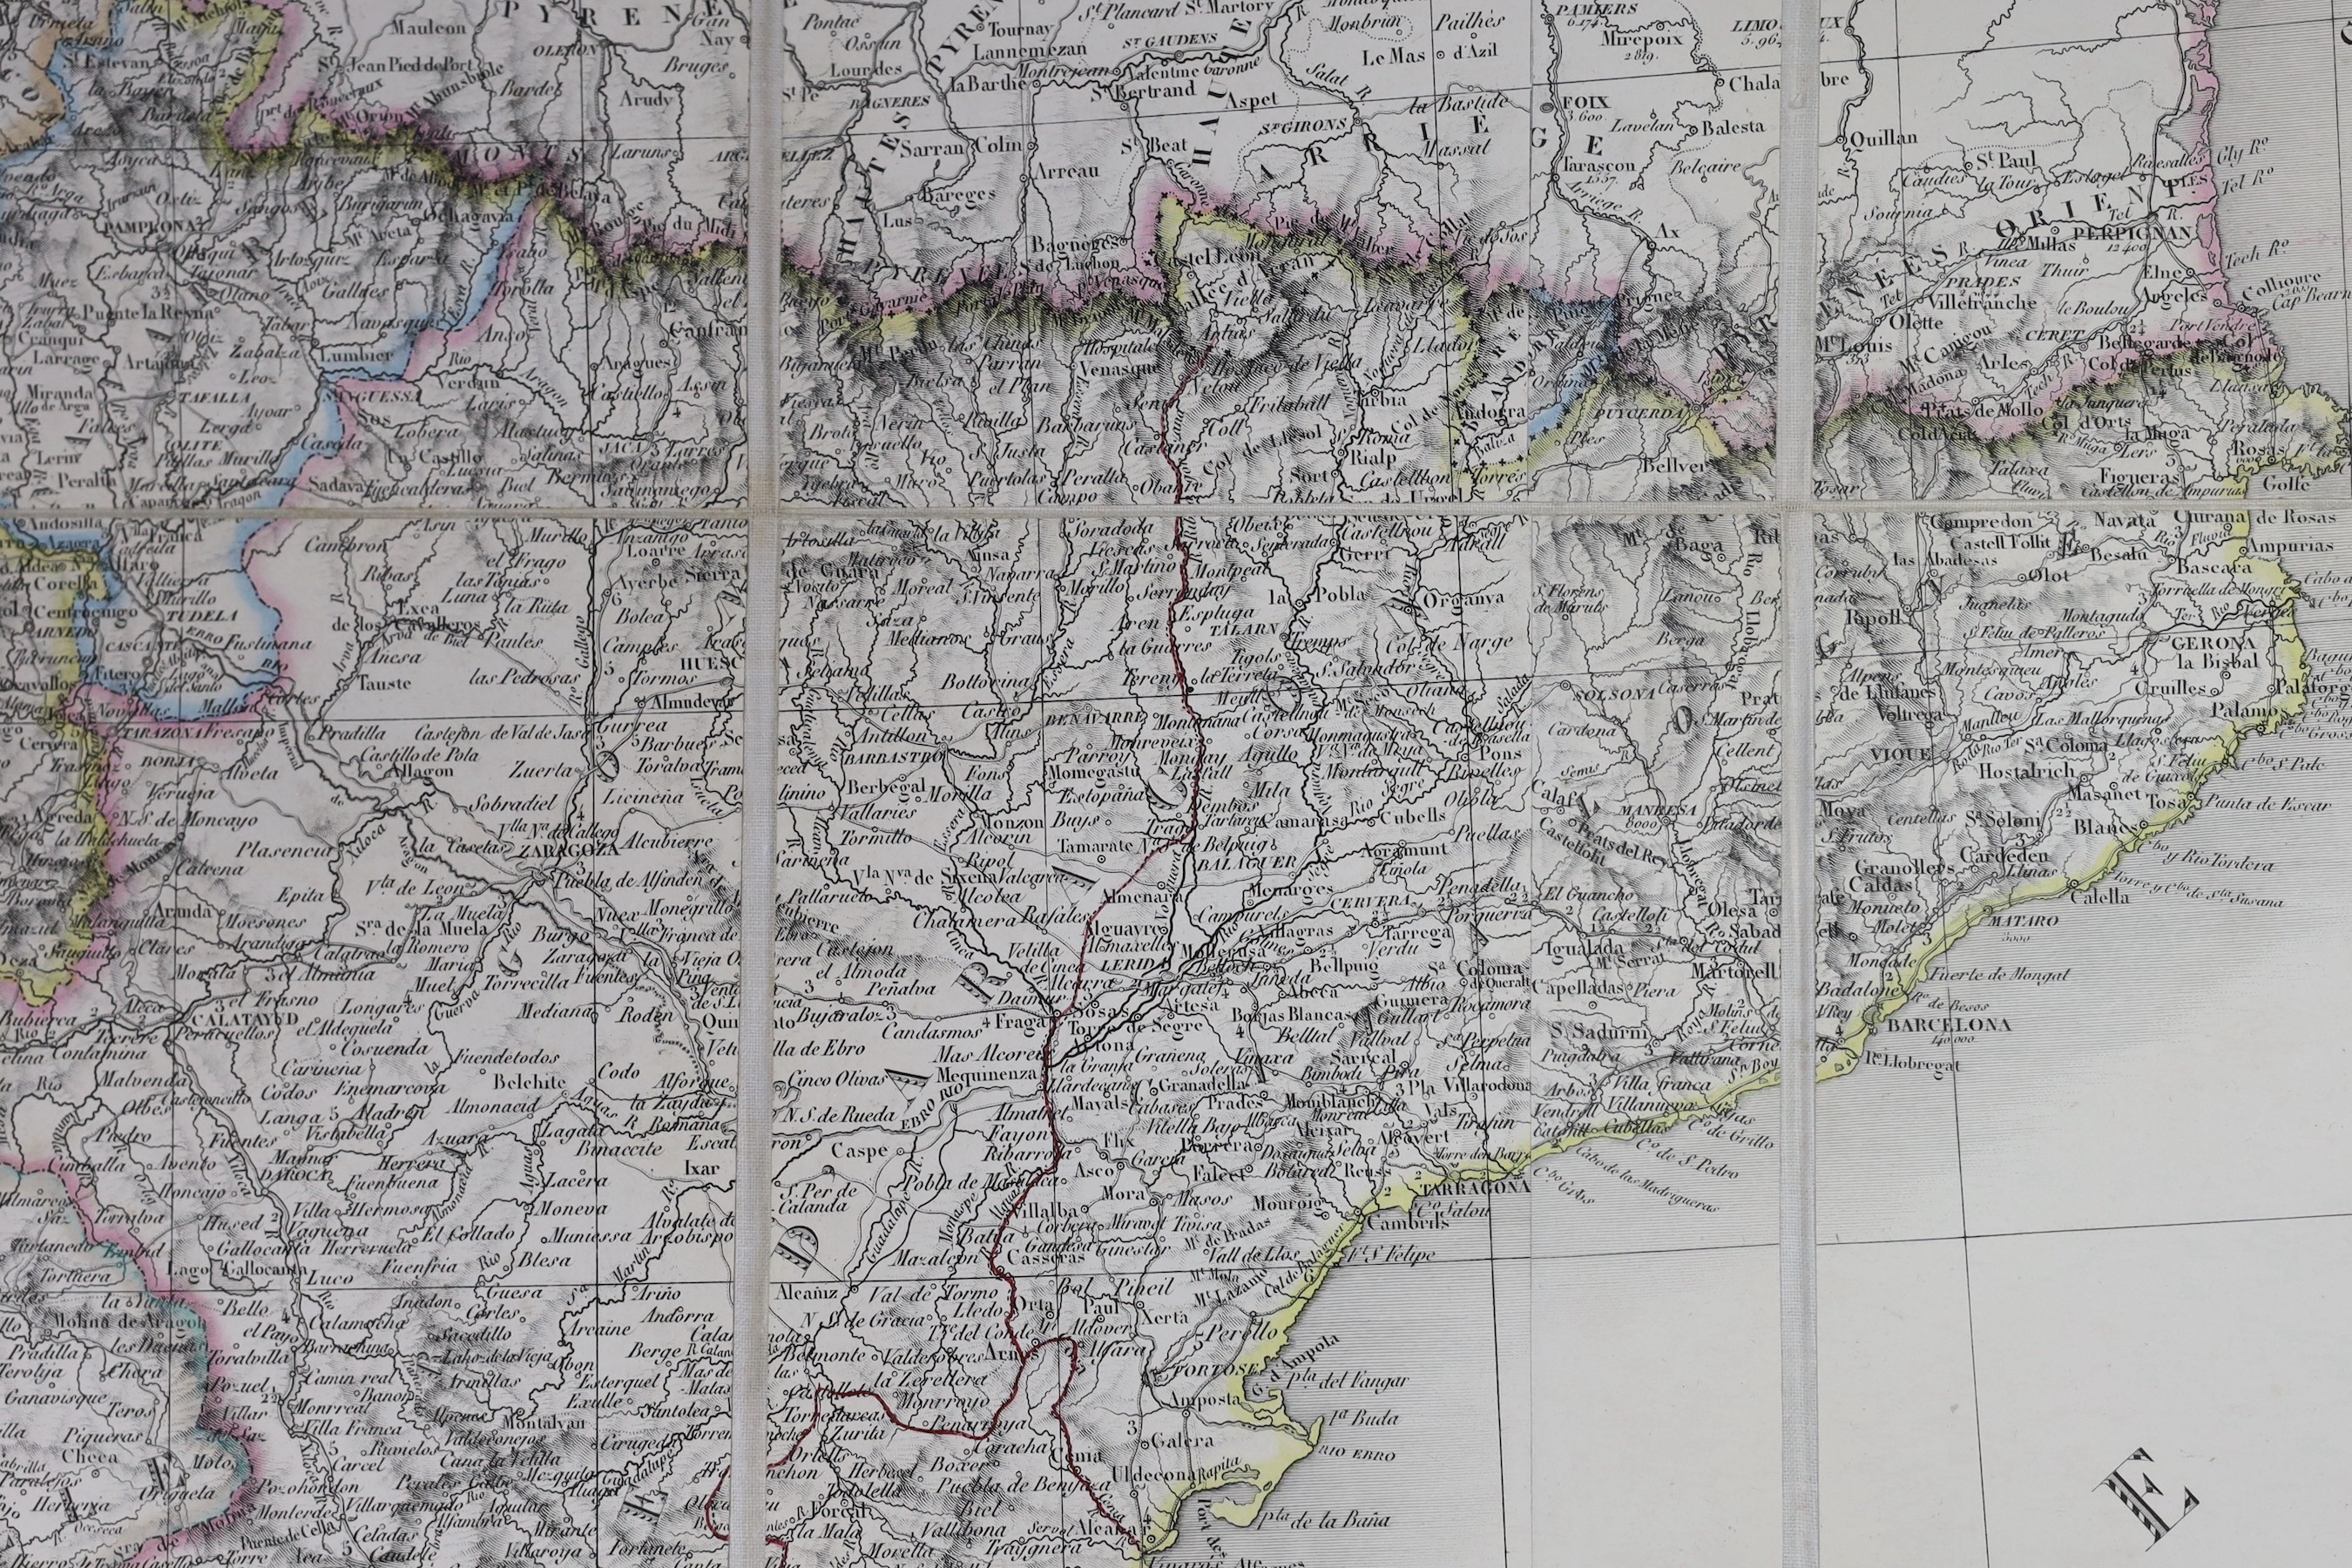 Wyld, James - Spain and Portugal, a set of 4 linen backed folding maps, coloured in outline, c.1820, 66 x 97.5cms., in worn slip case, together with Vivien de Saint-Martin, Louis - Carte des Royaumes d’Espagne et de Port